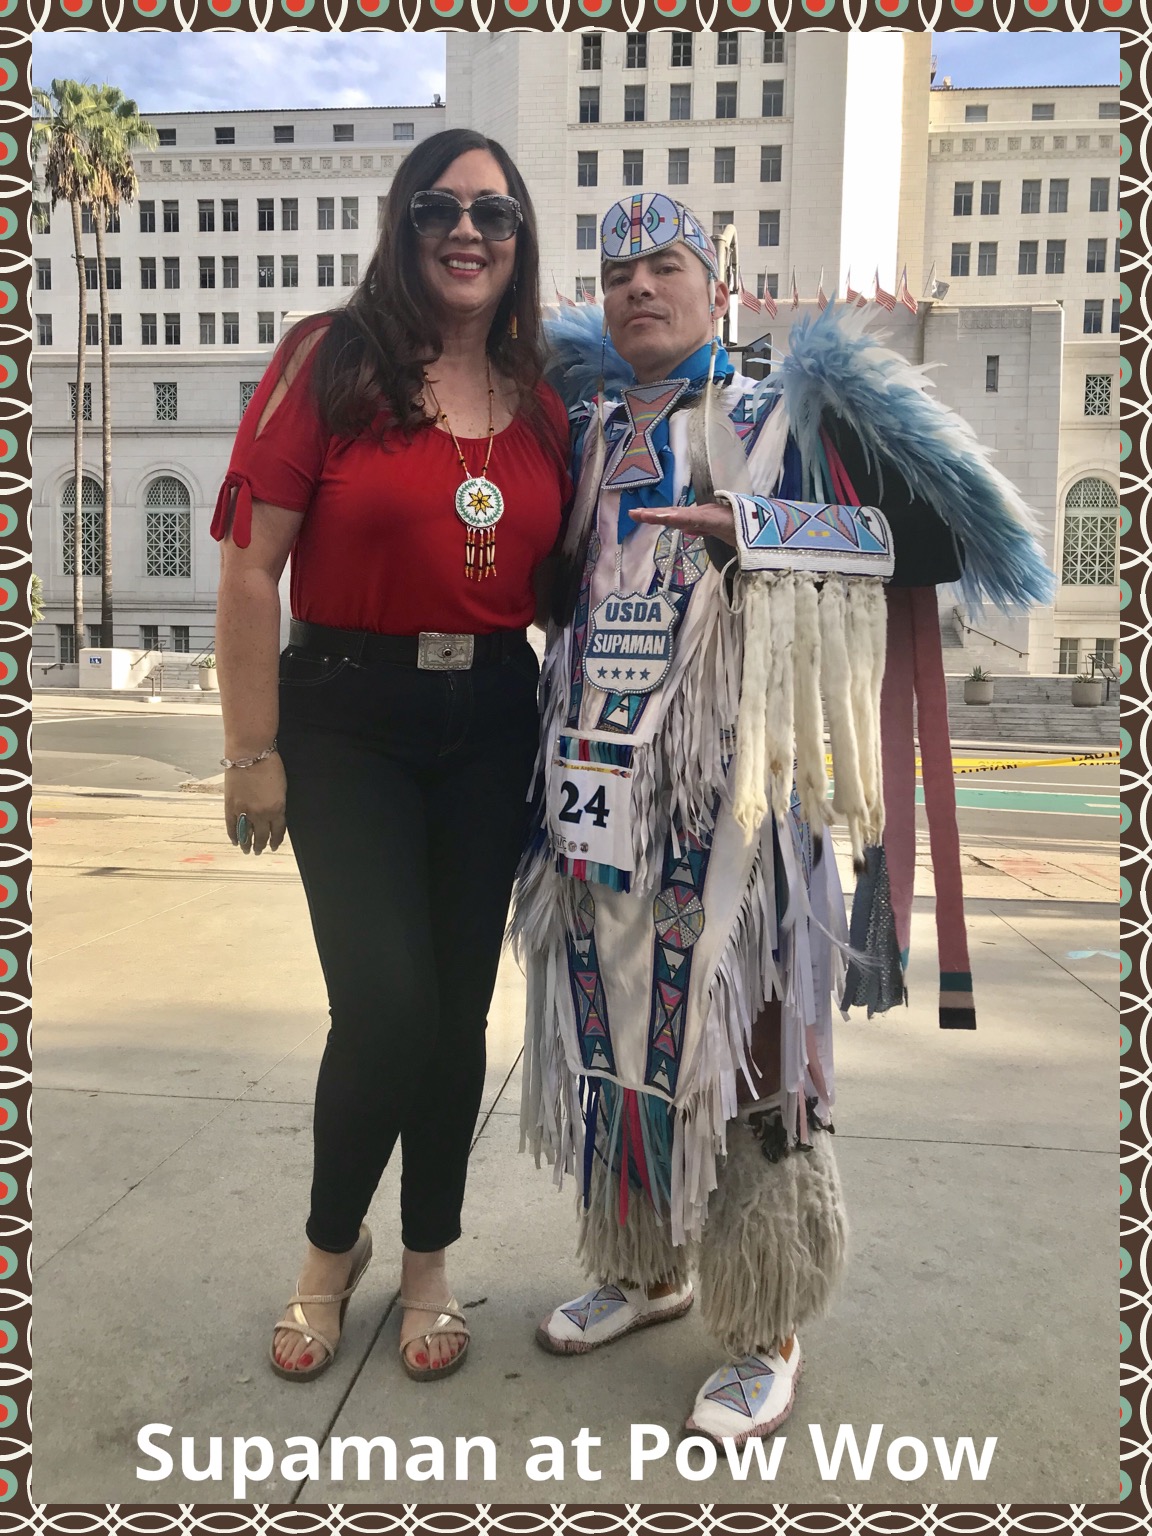 Pow Wow’s a Native American celebration